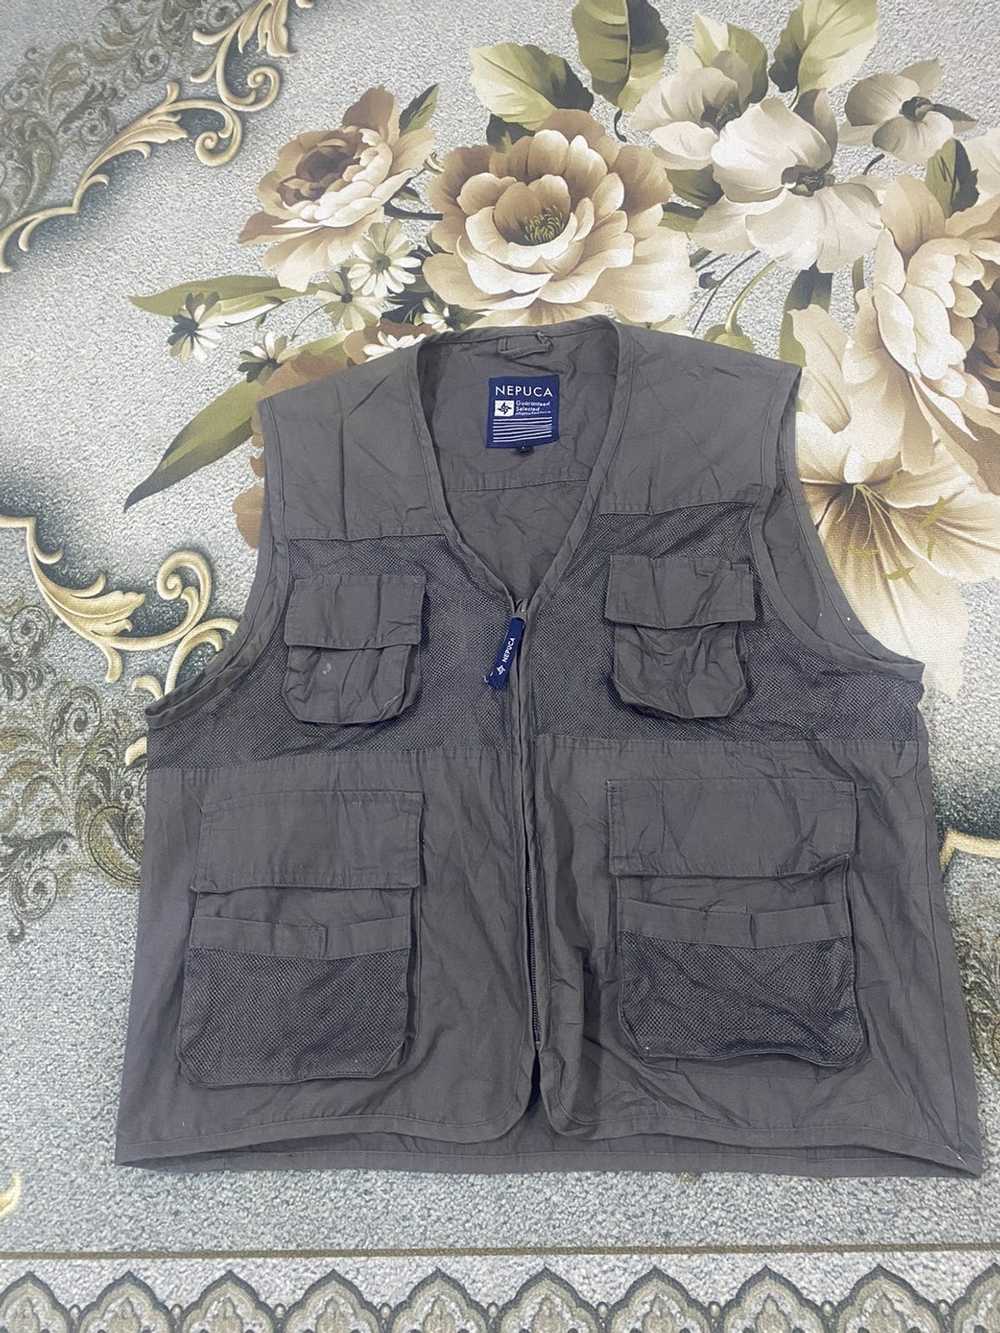 Japanese Brand Nepuca Tactical Vest - image 1